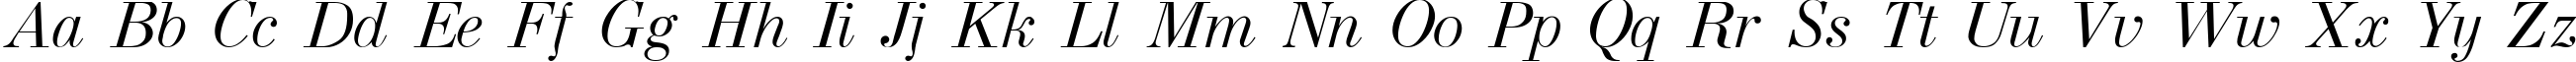 Пример написания английского алфавита шрифтом Usual New Italic